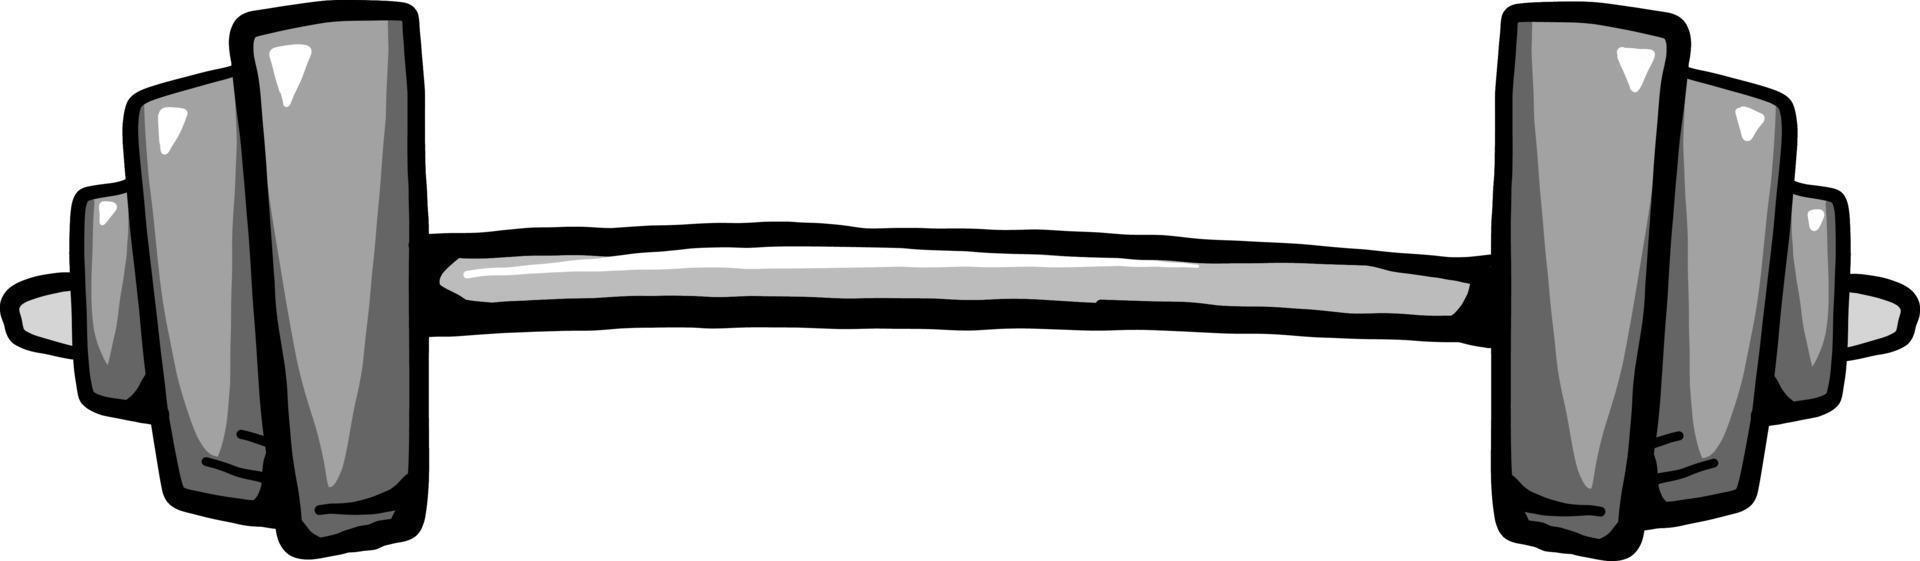 stål skivstång, illustration, vektor på vit bakgrund